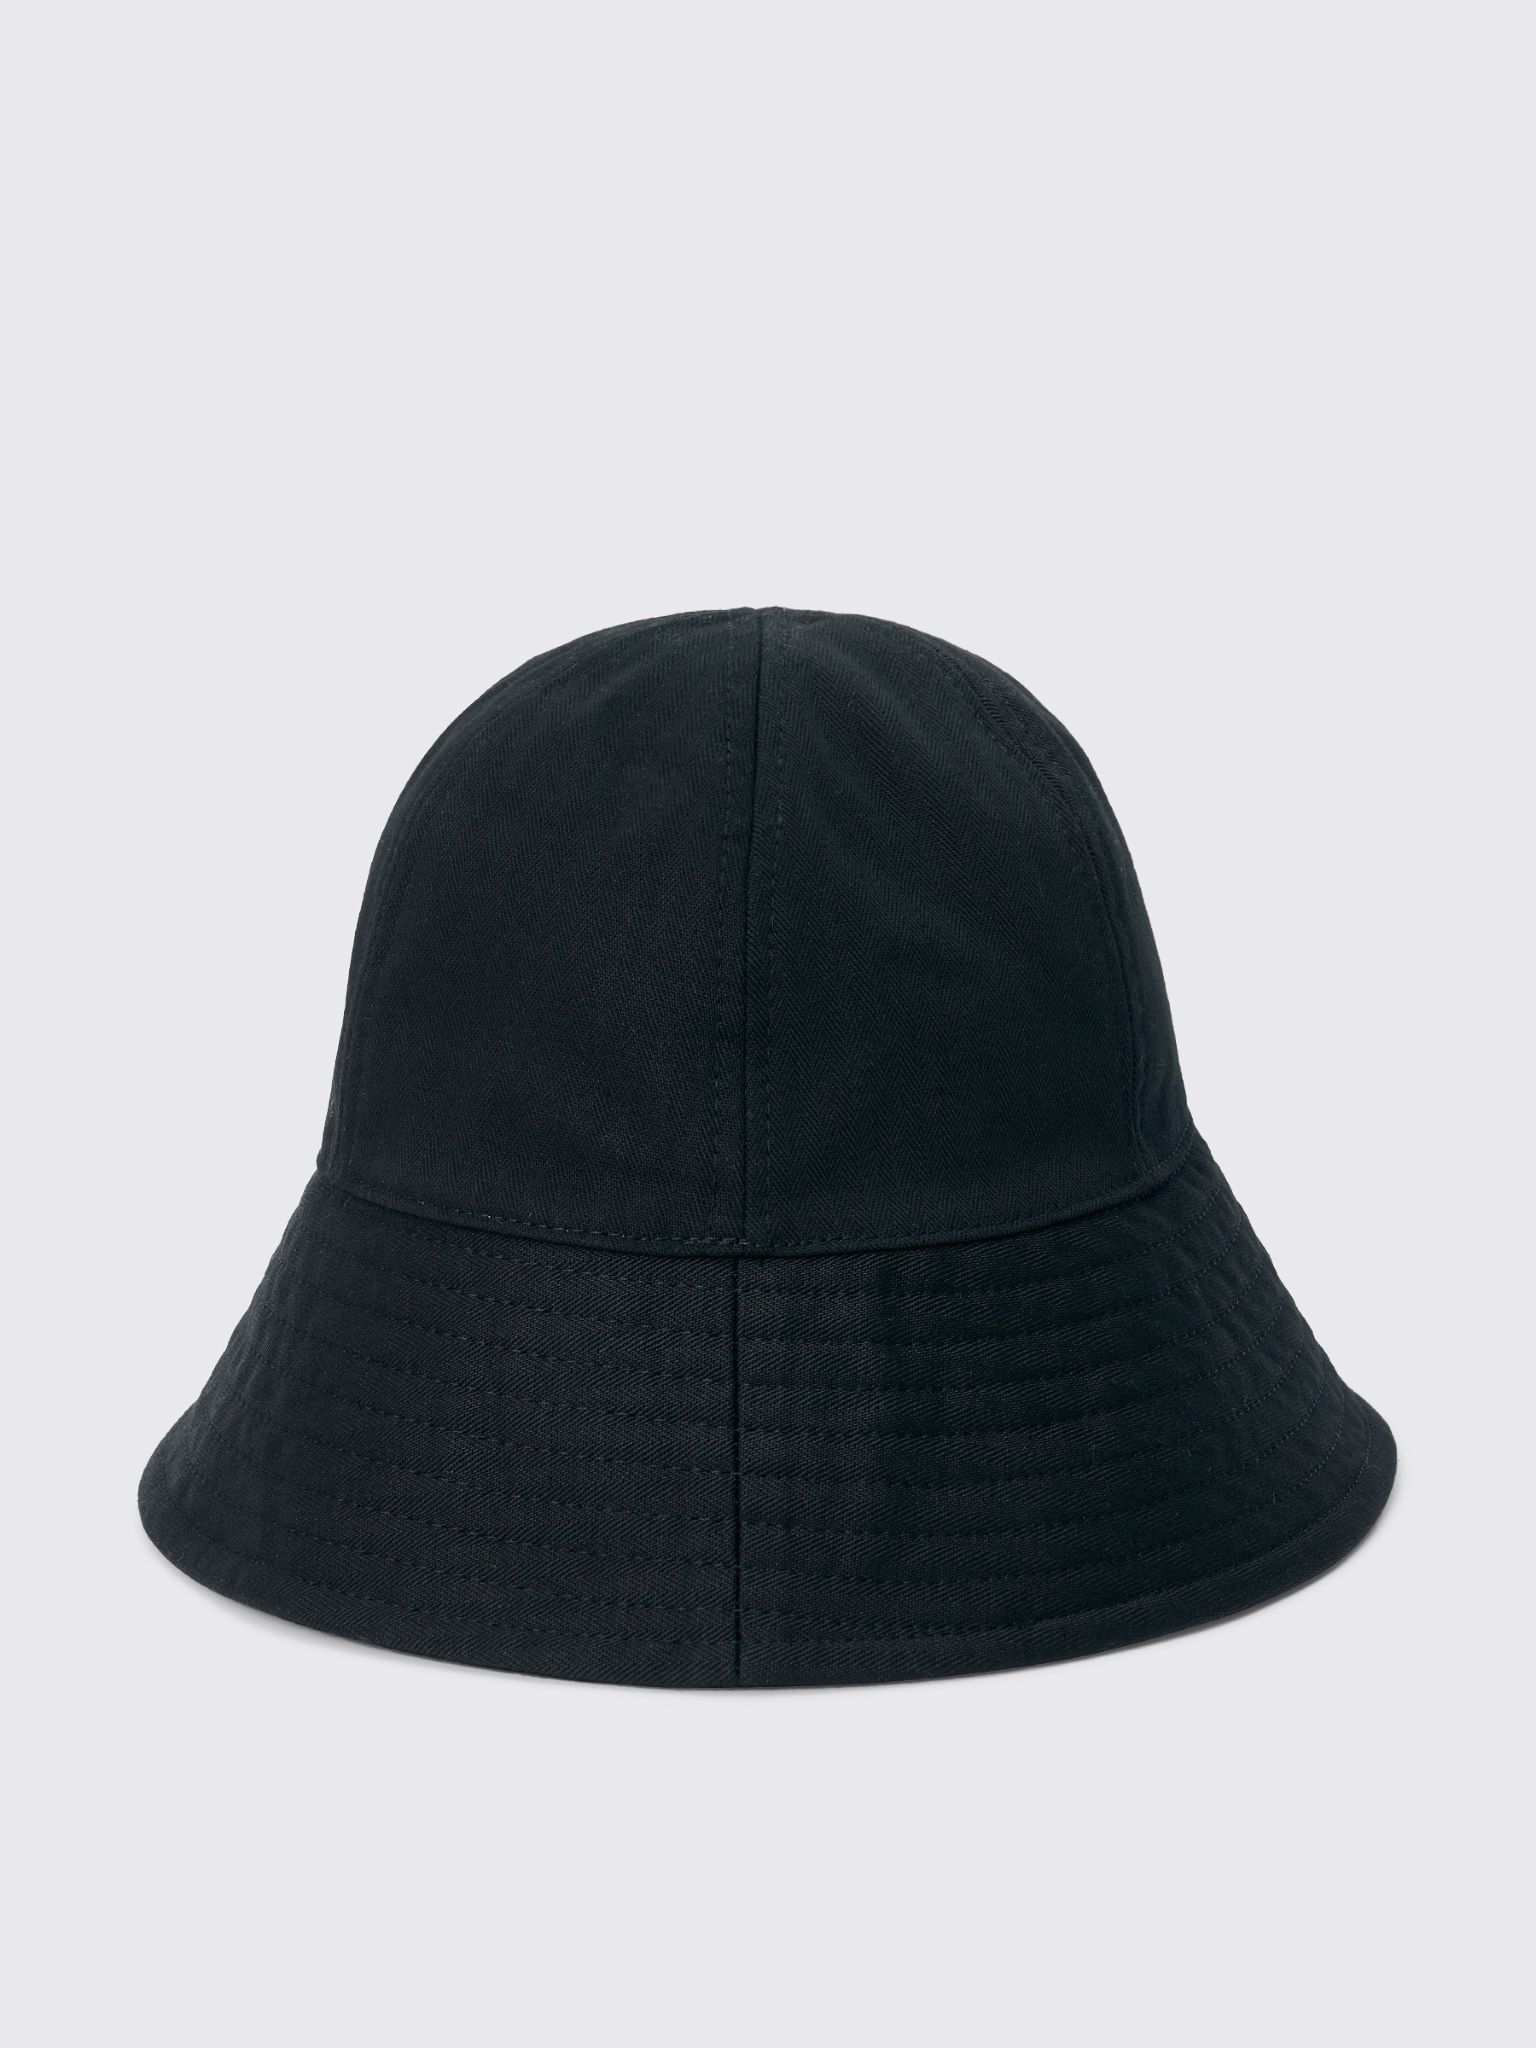 Très Bien - Jil Sander+ Herringbone Cotton Hat Black